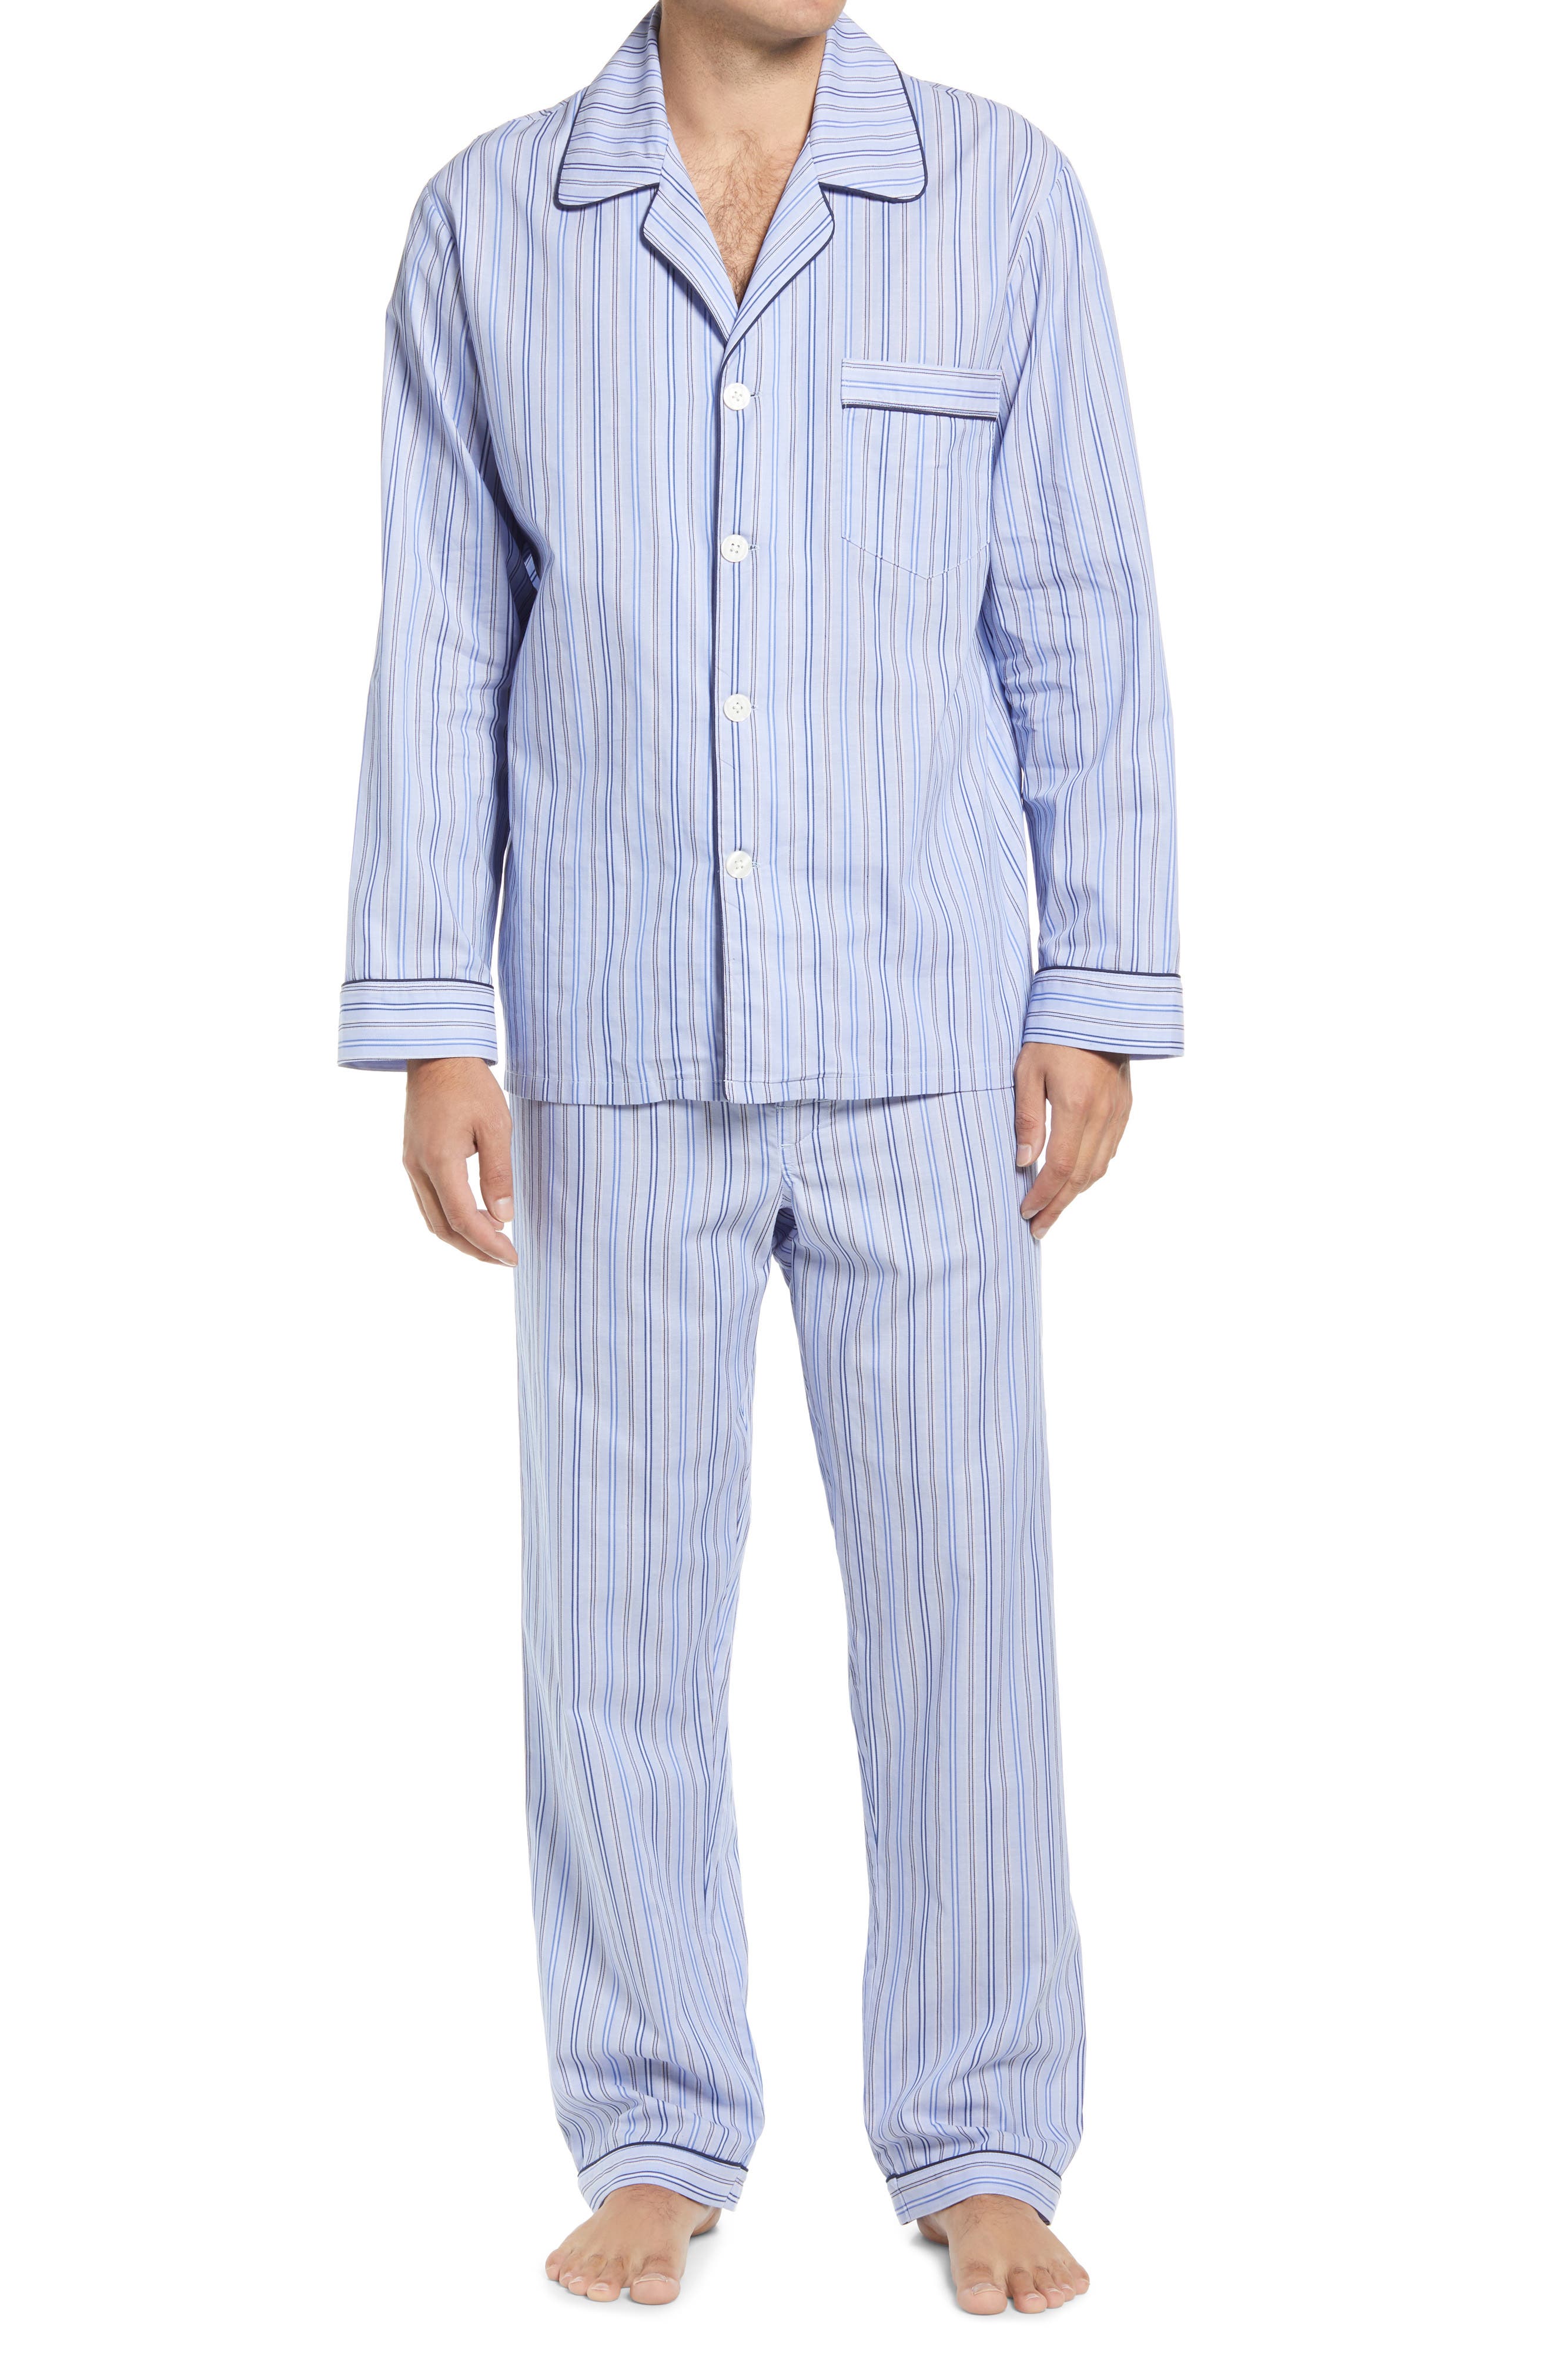 Mens Long Sleeve Pajama Set,Lightweight 2 Peice Pjs Set,Soft Cotton Sleepwear Set for Men